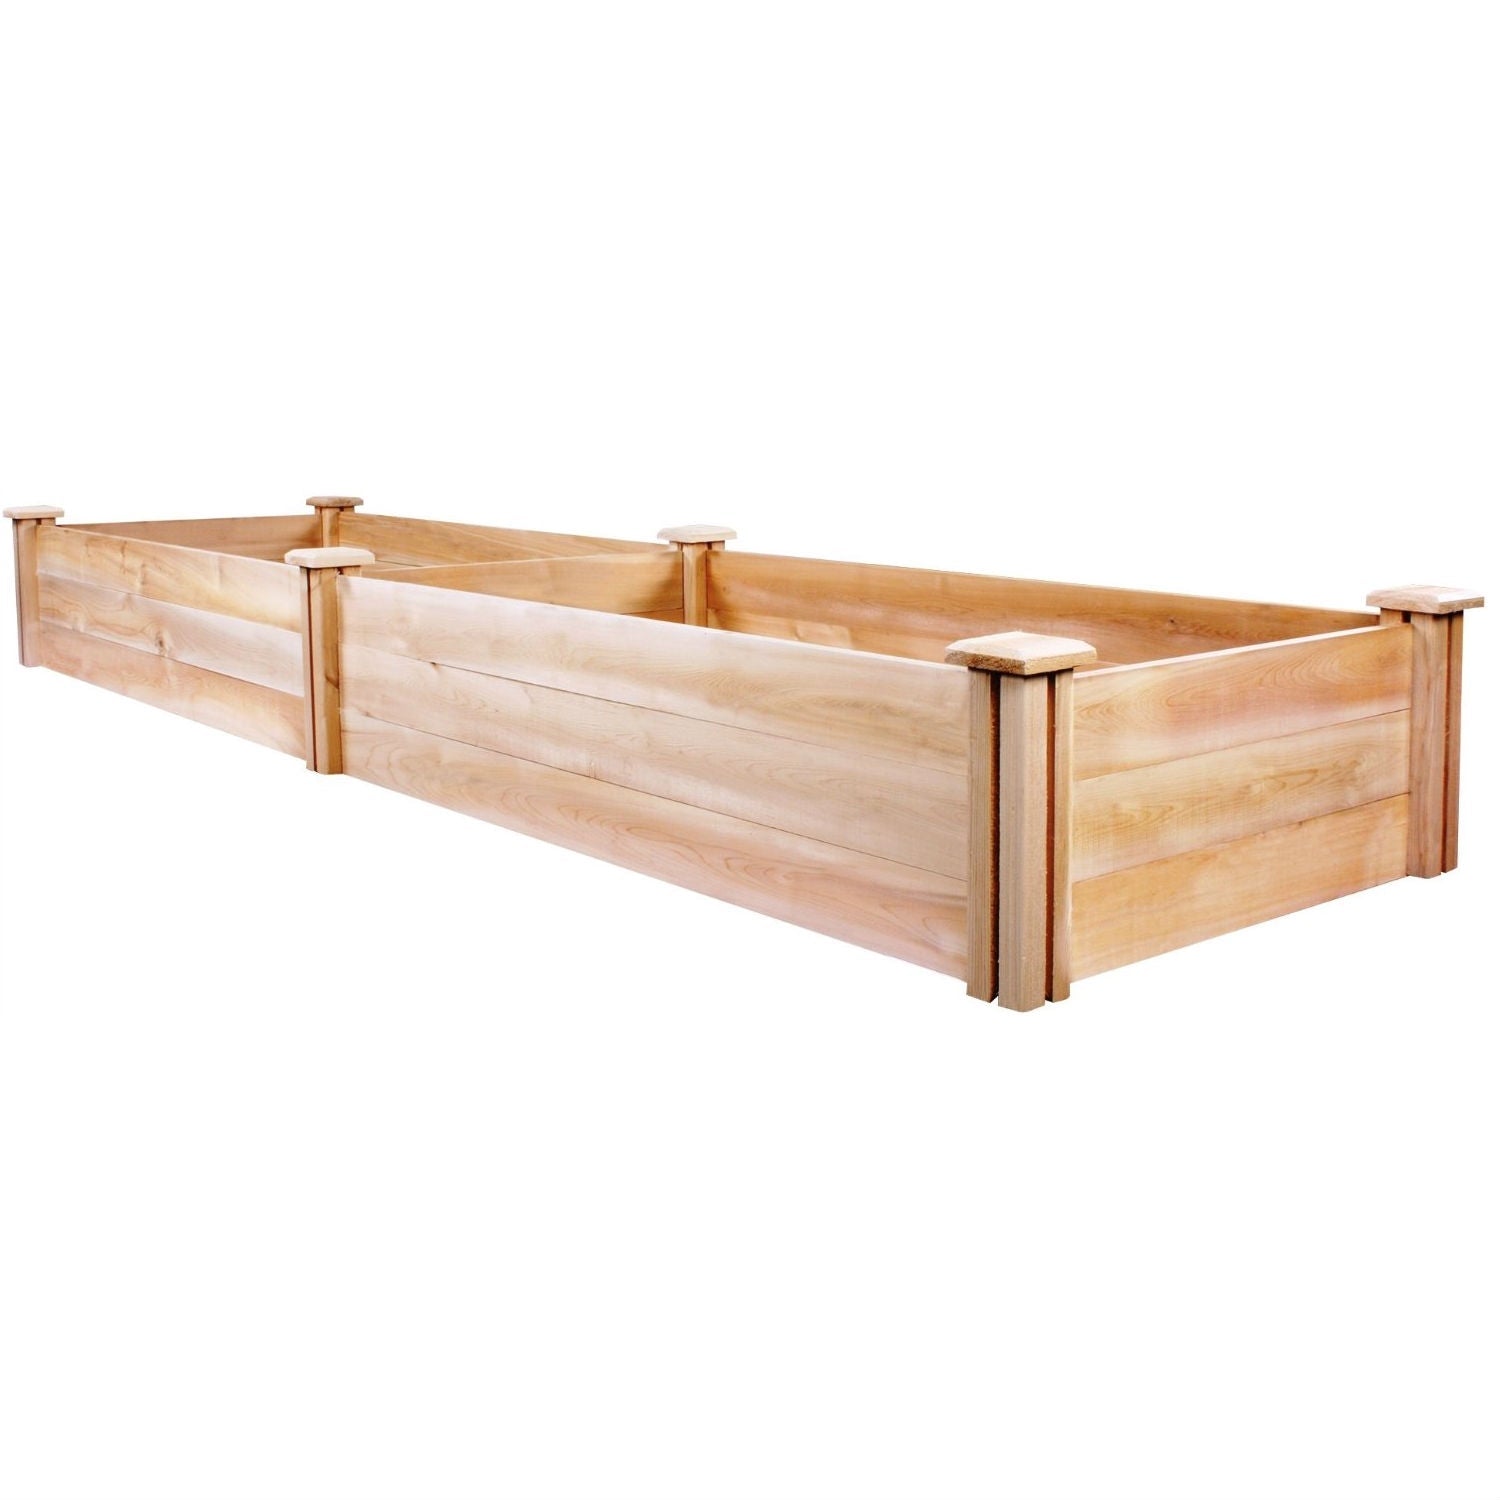 Outdoor > Gardening > Planters - Cedar Wood 2-Ft X 8-Ft Outdoor Raised Garden Bed Planter Frame - Made In USA